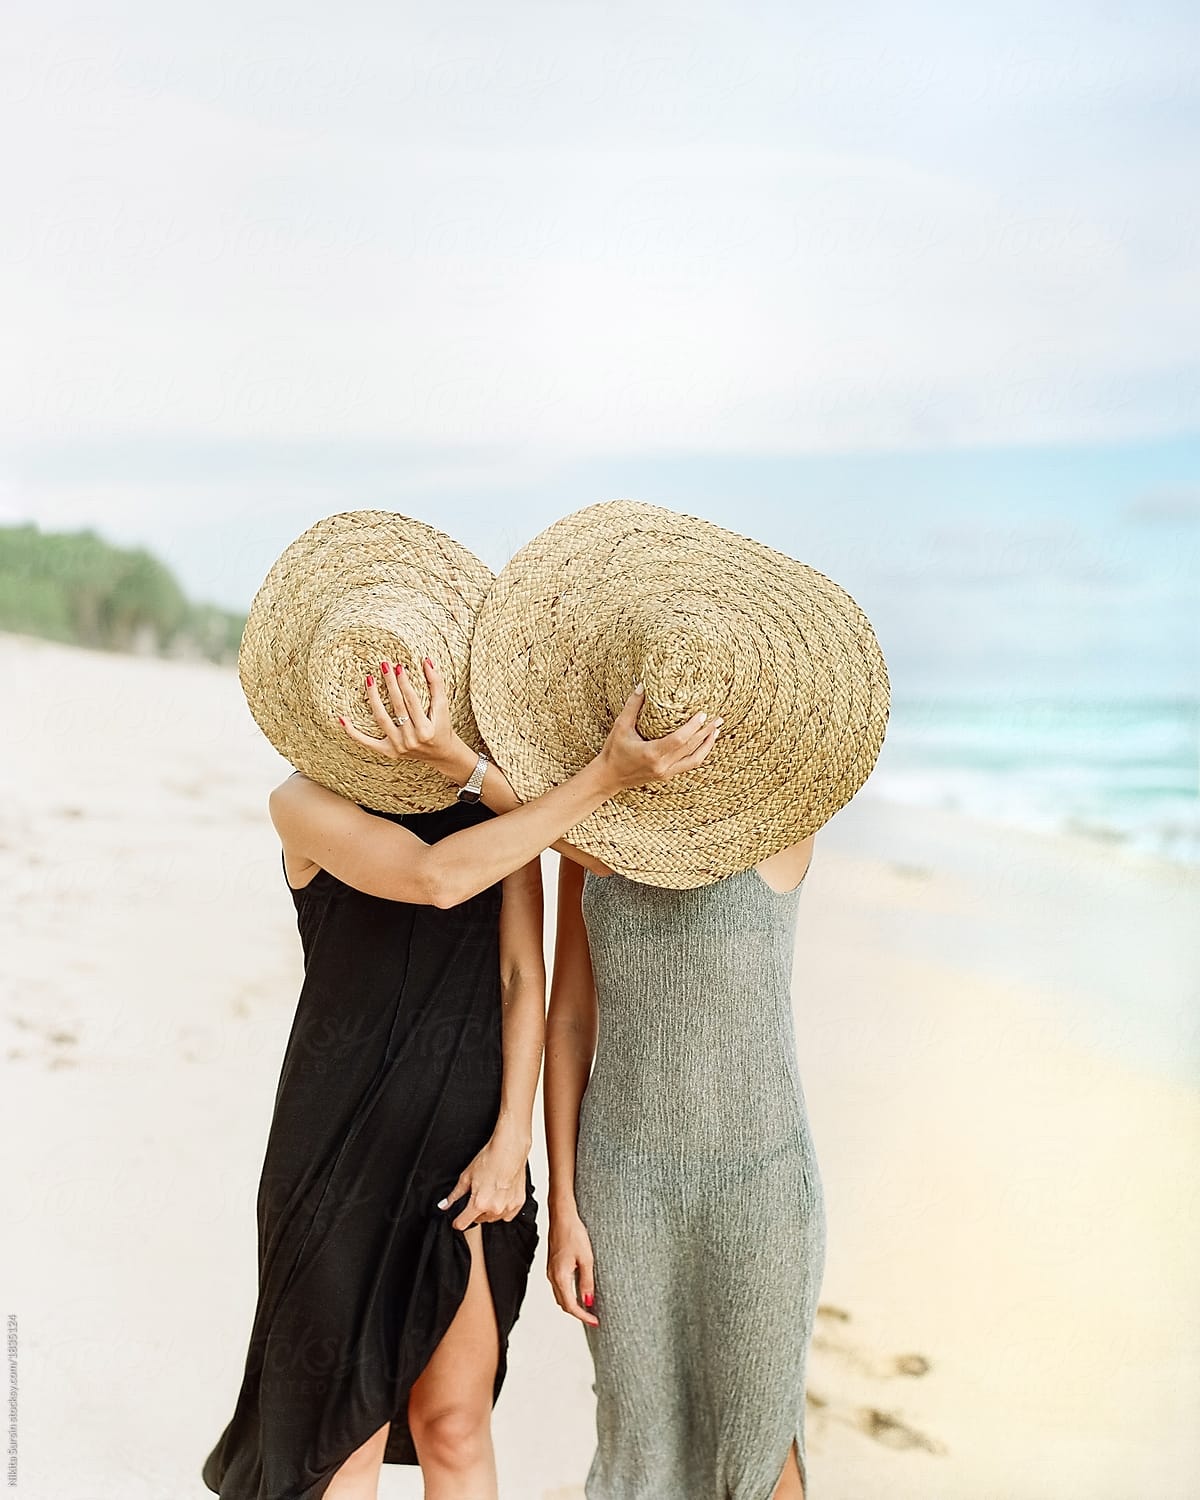 Friendships: girls having fun on the beach